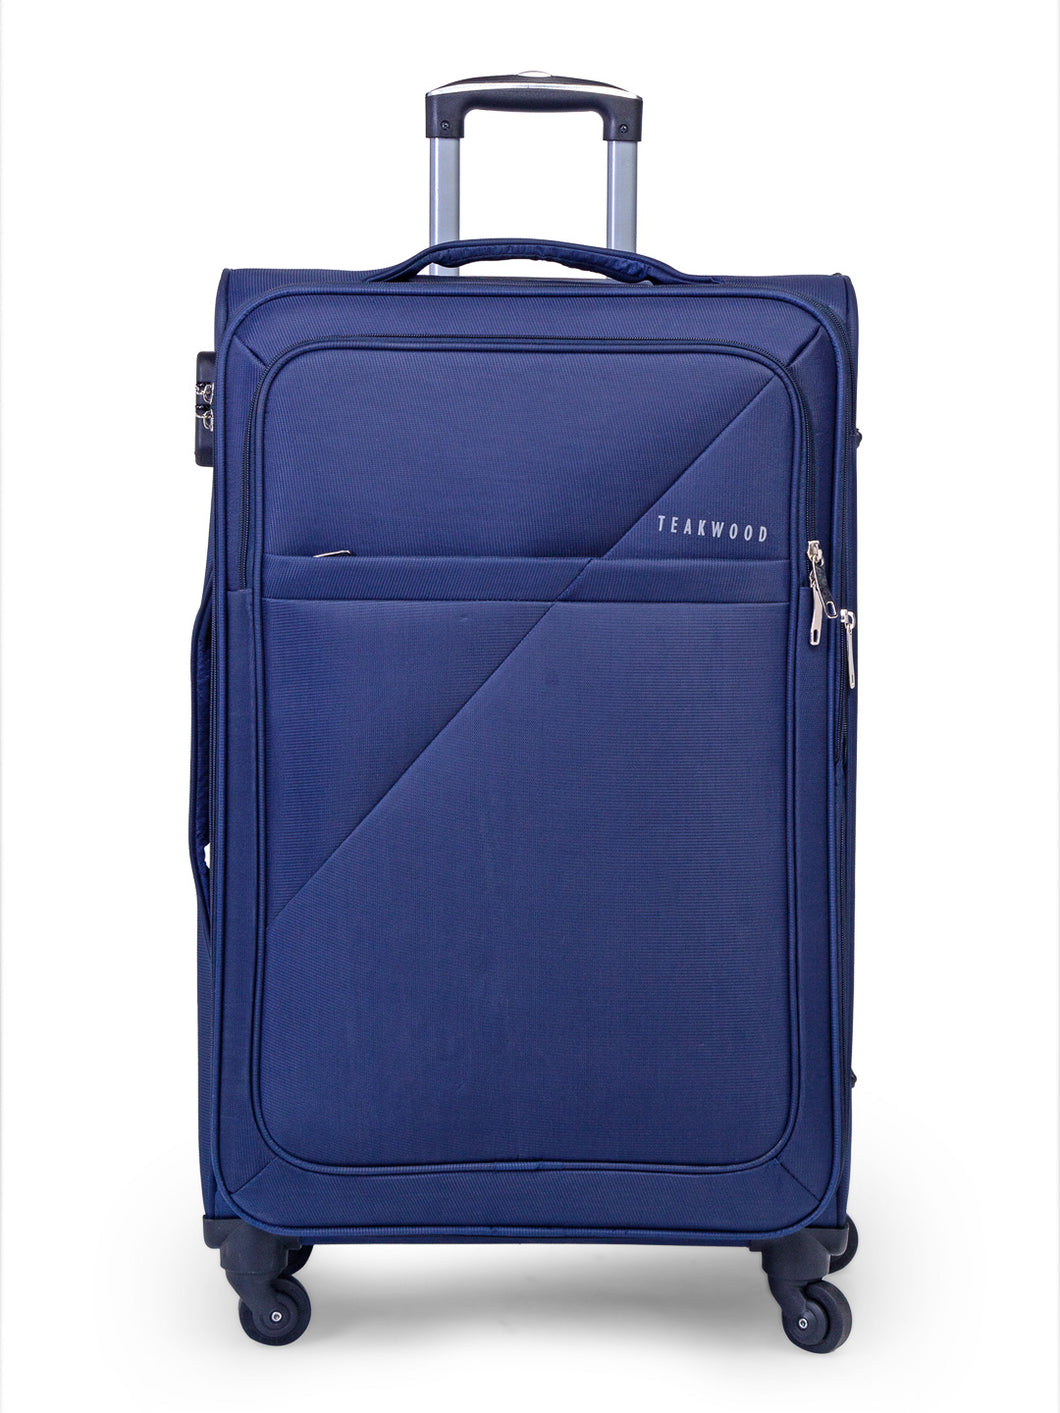 Teakwood Blue Trolley Bag (Large)